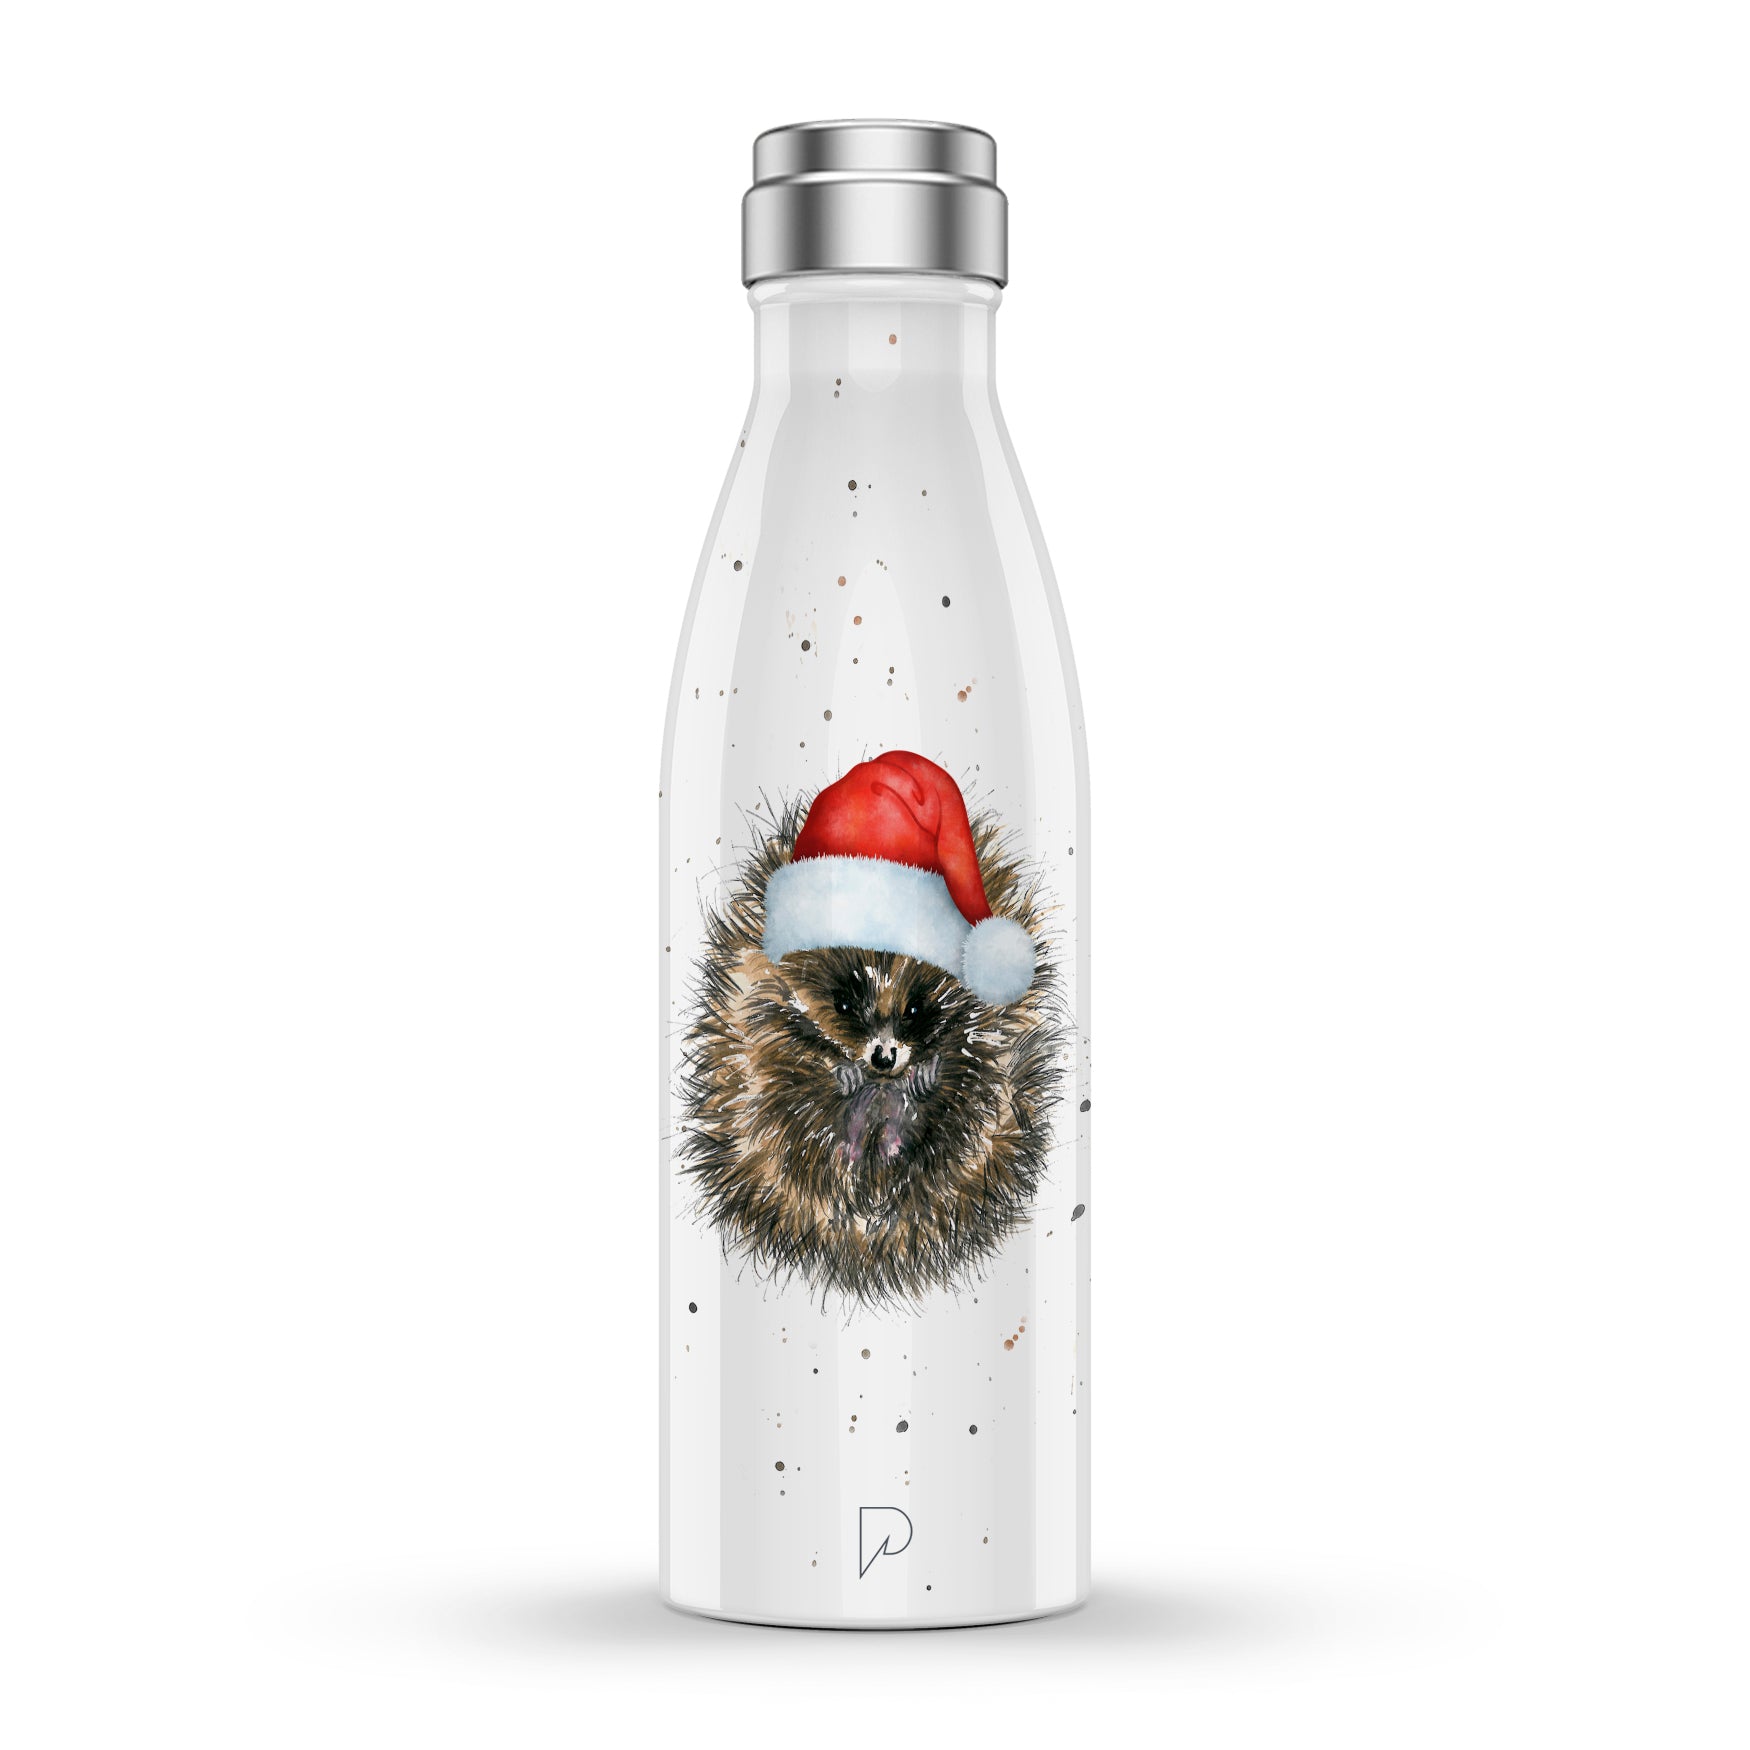 ICE° Bottle Hector Christmas Hedgehog - Stainless Steel Water Bottle